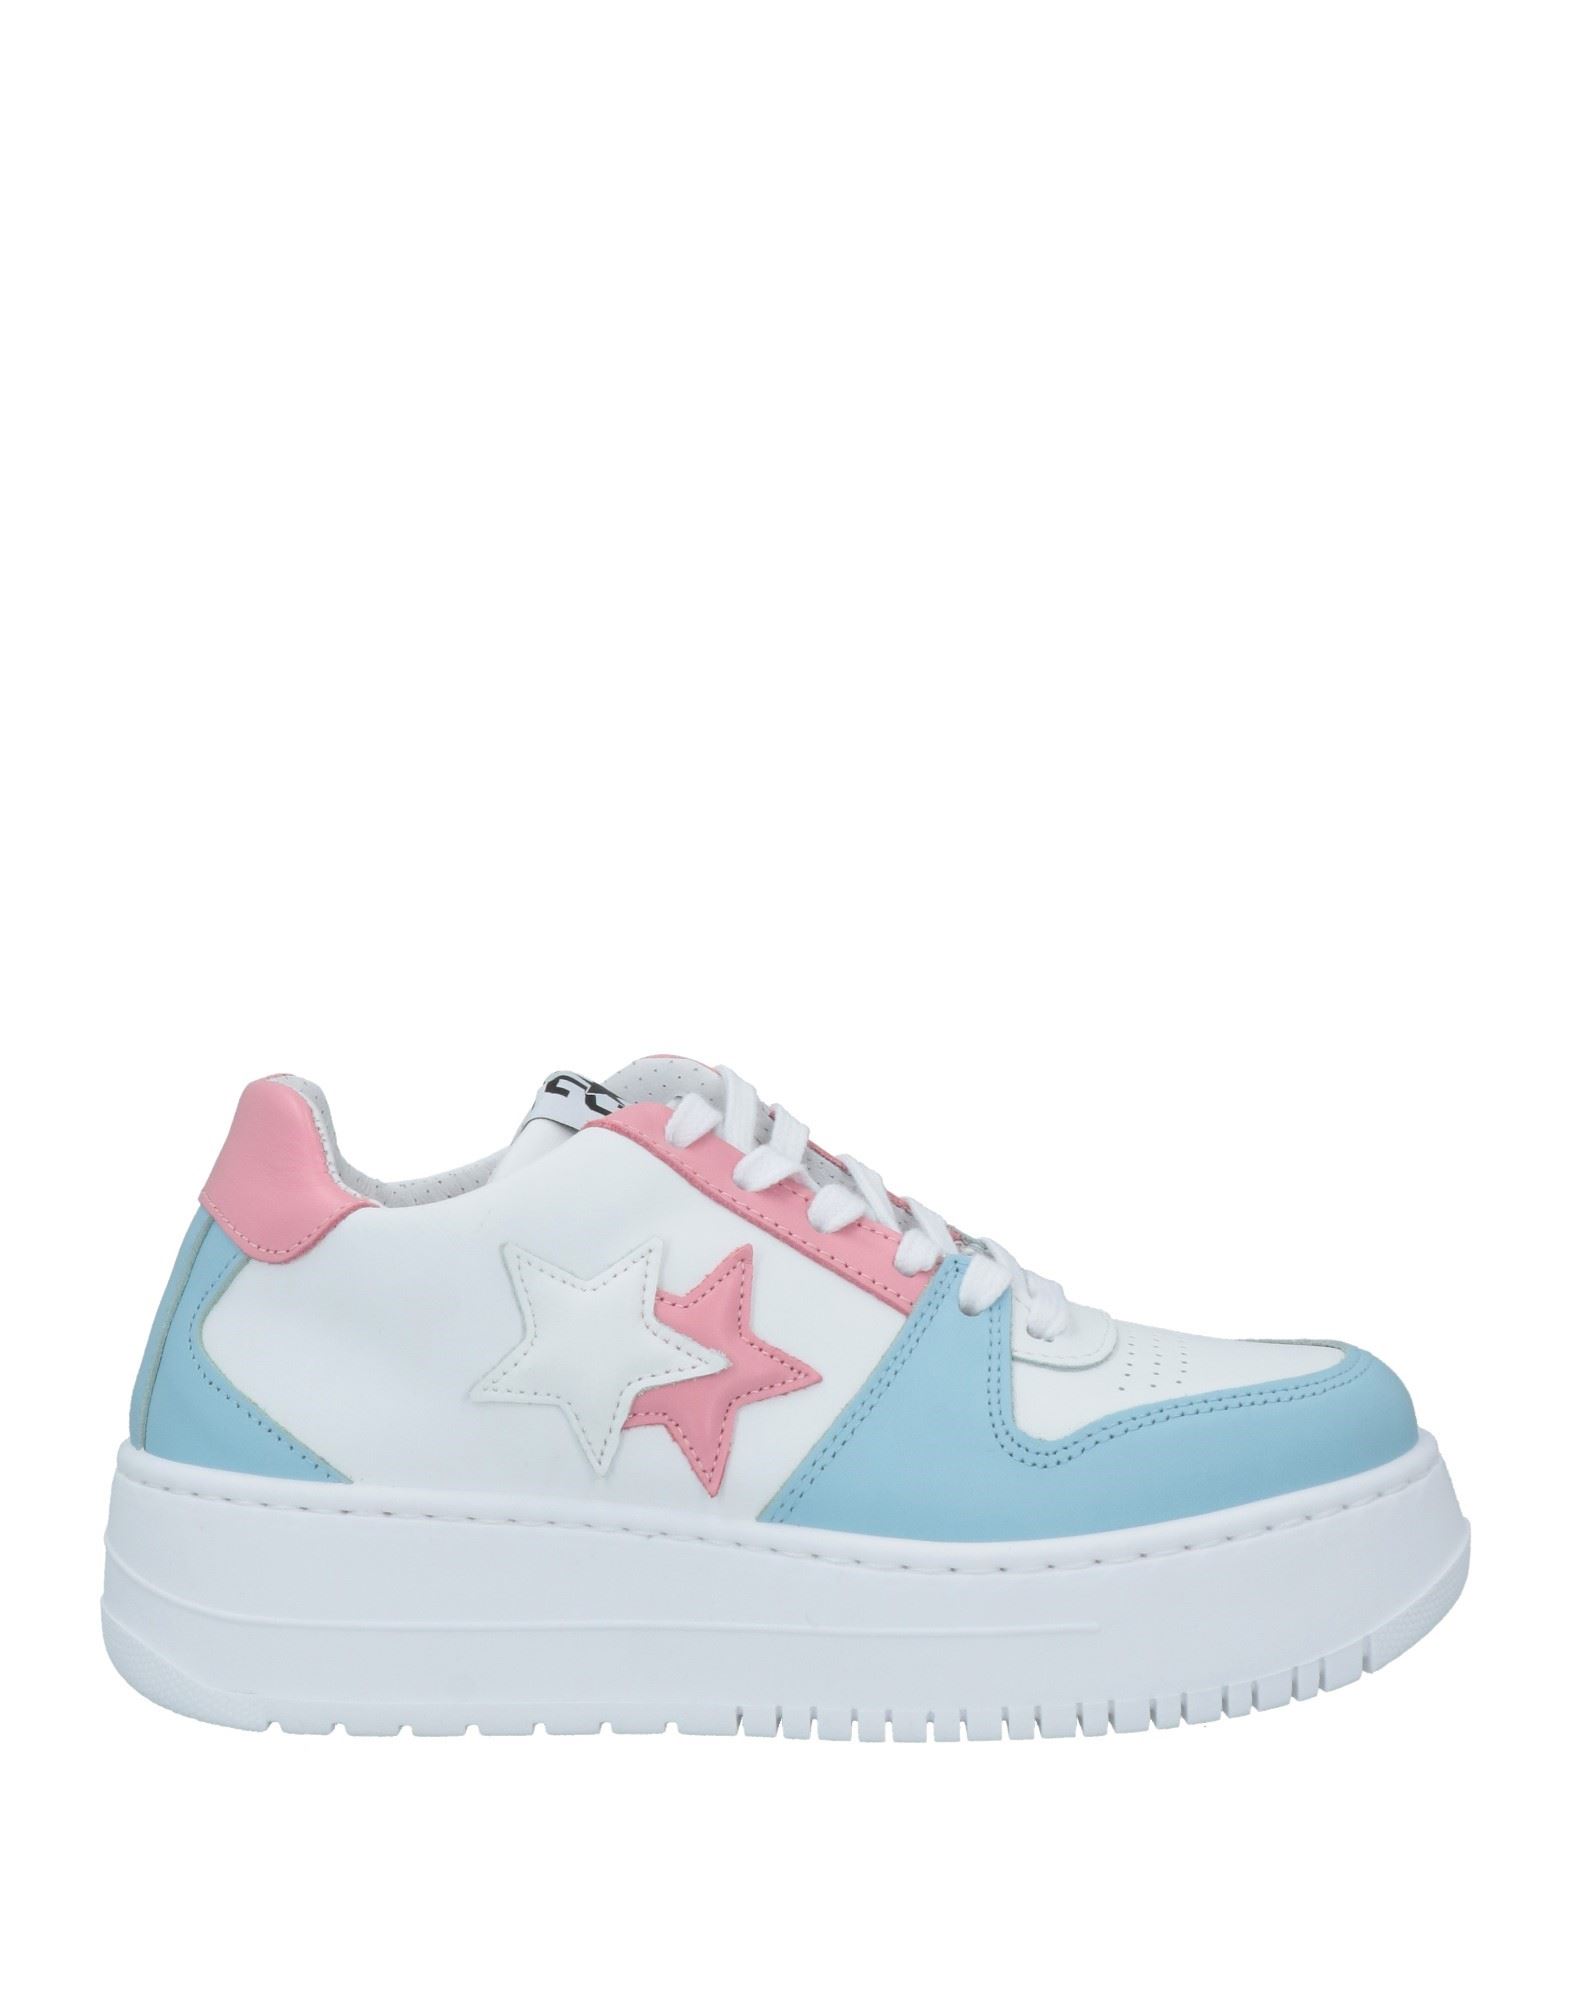 2star Sneakers In Blue